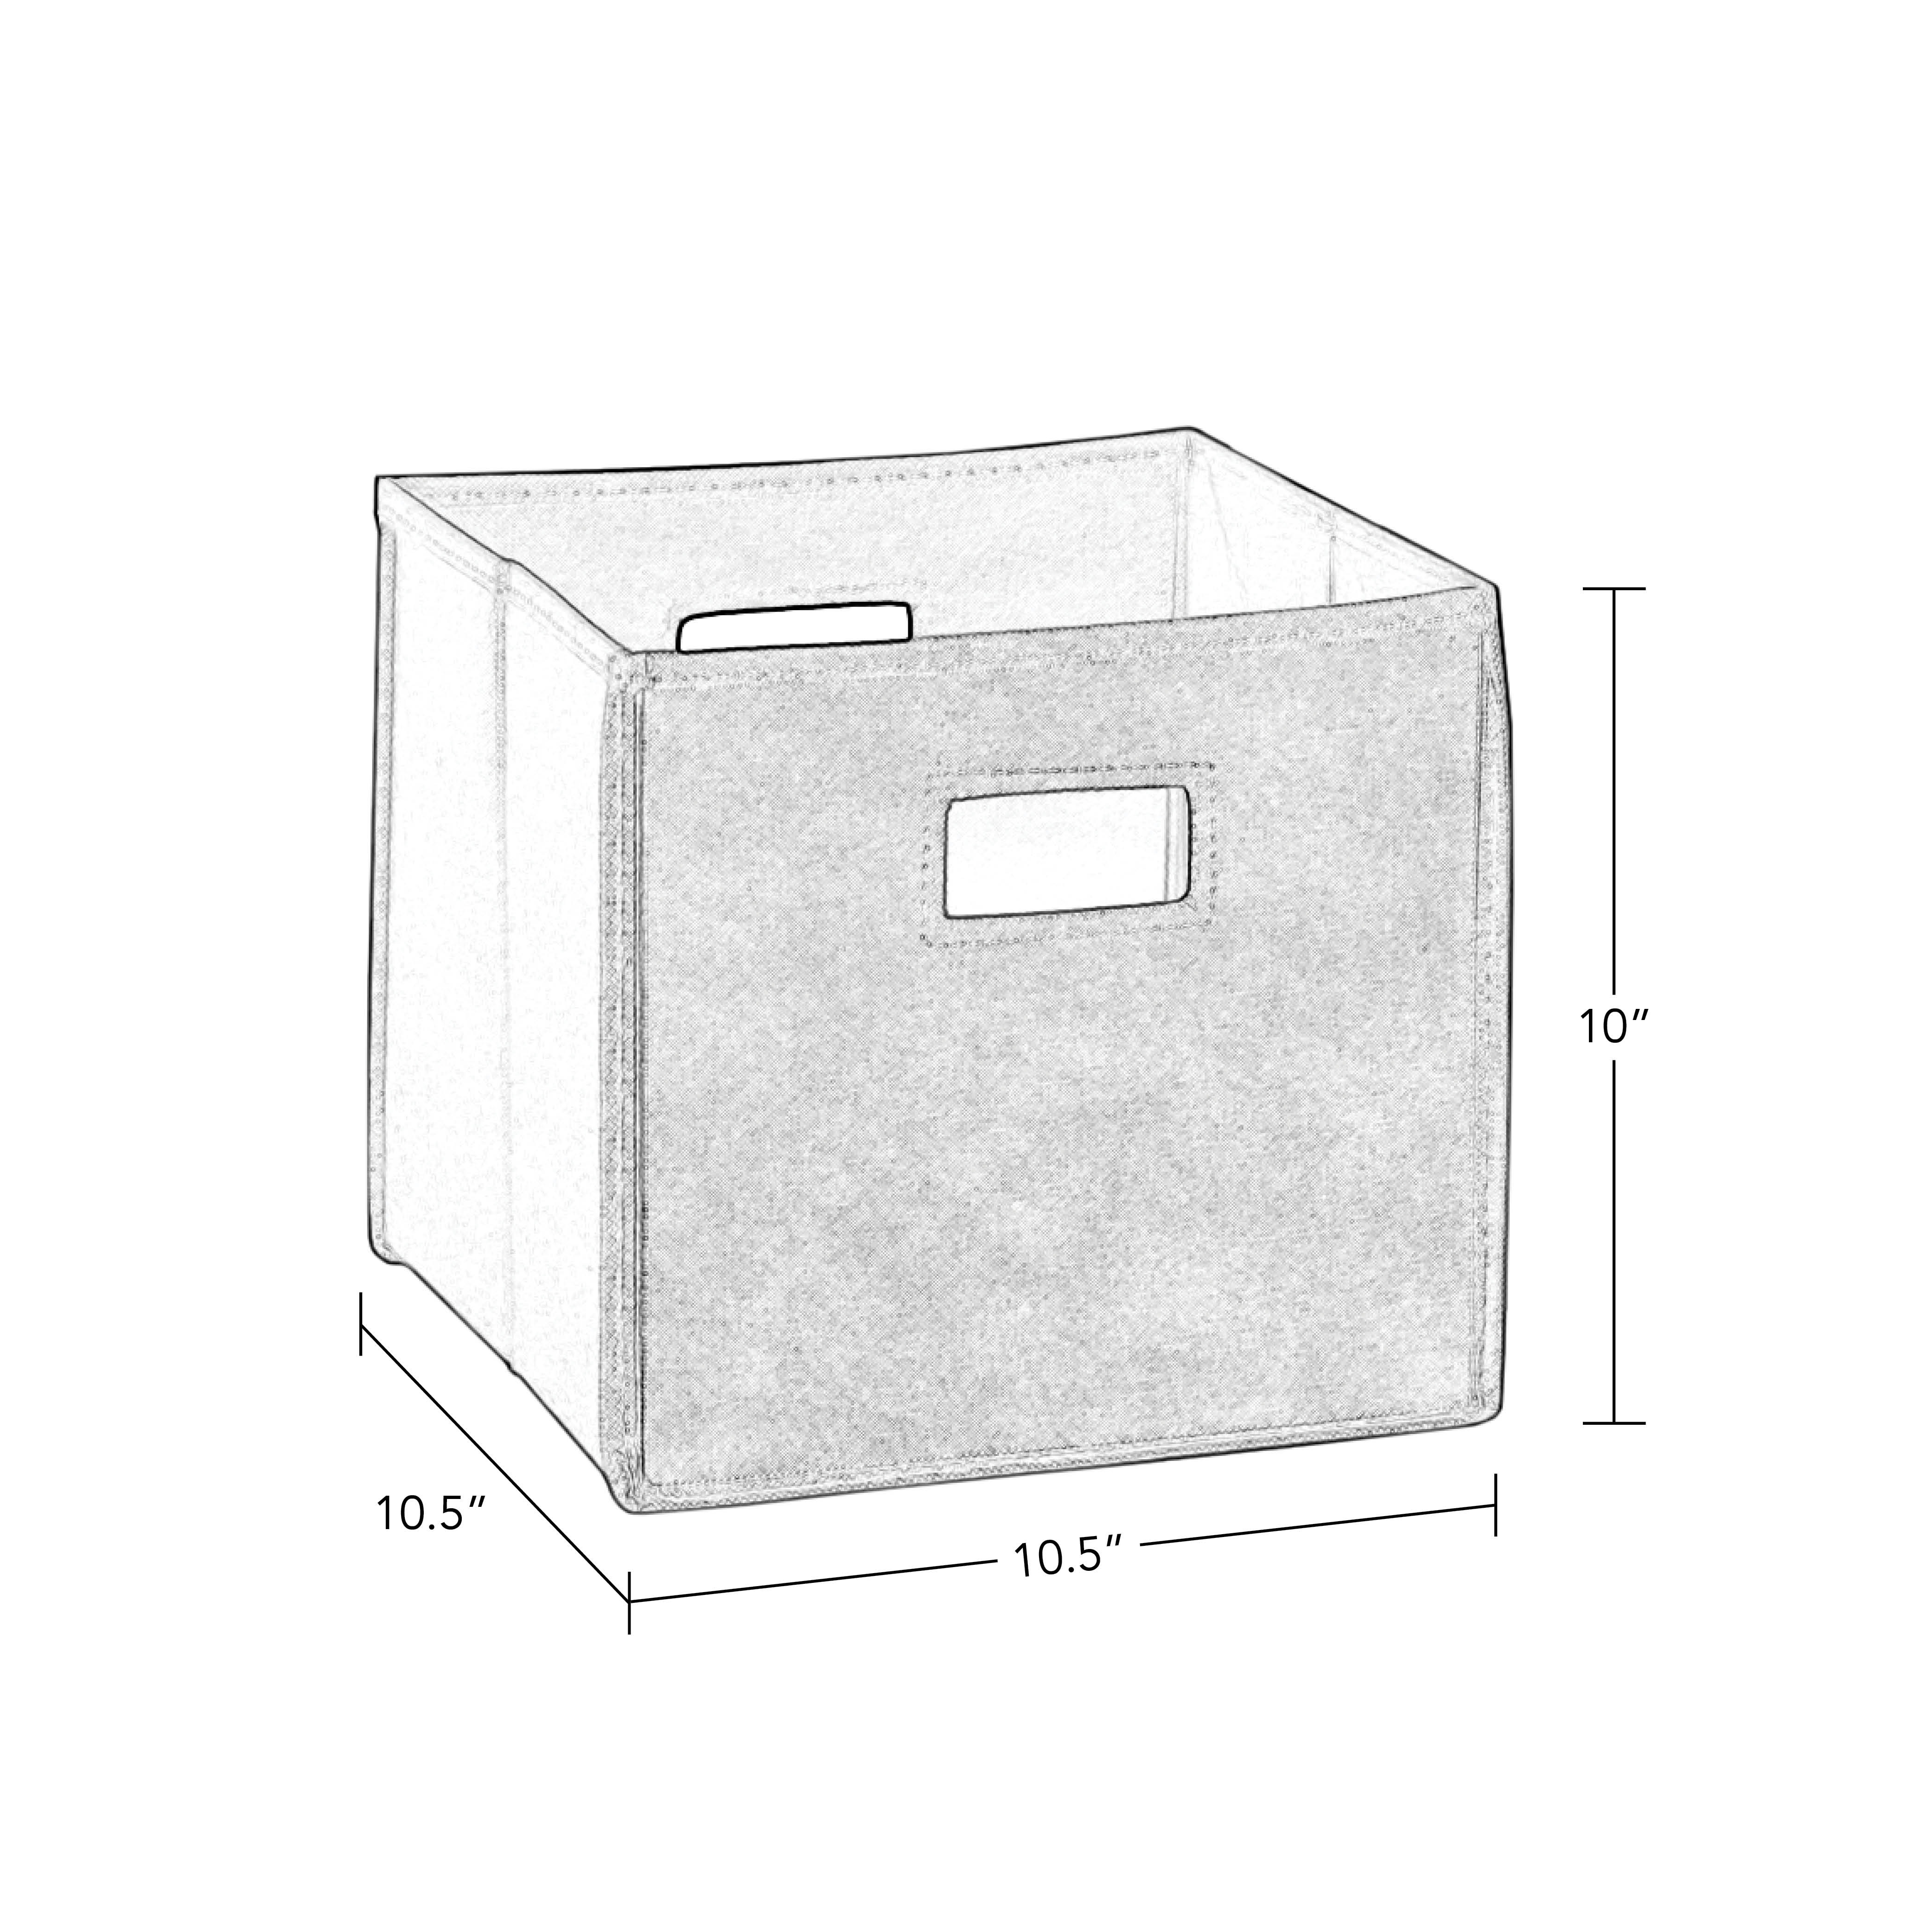 RiverRidge Home Folding Fabric Cube Storage Bin Set of 2 - Olive - image 5 of 8